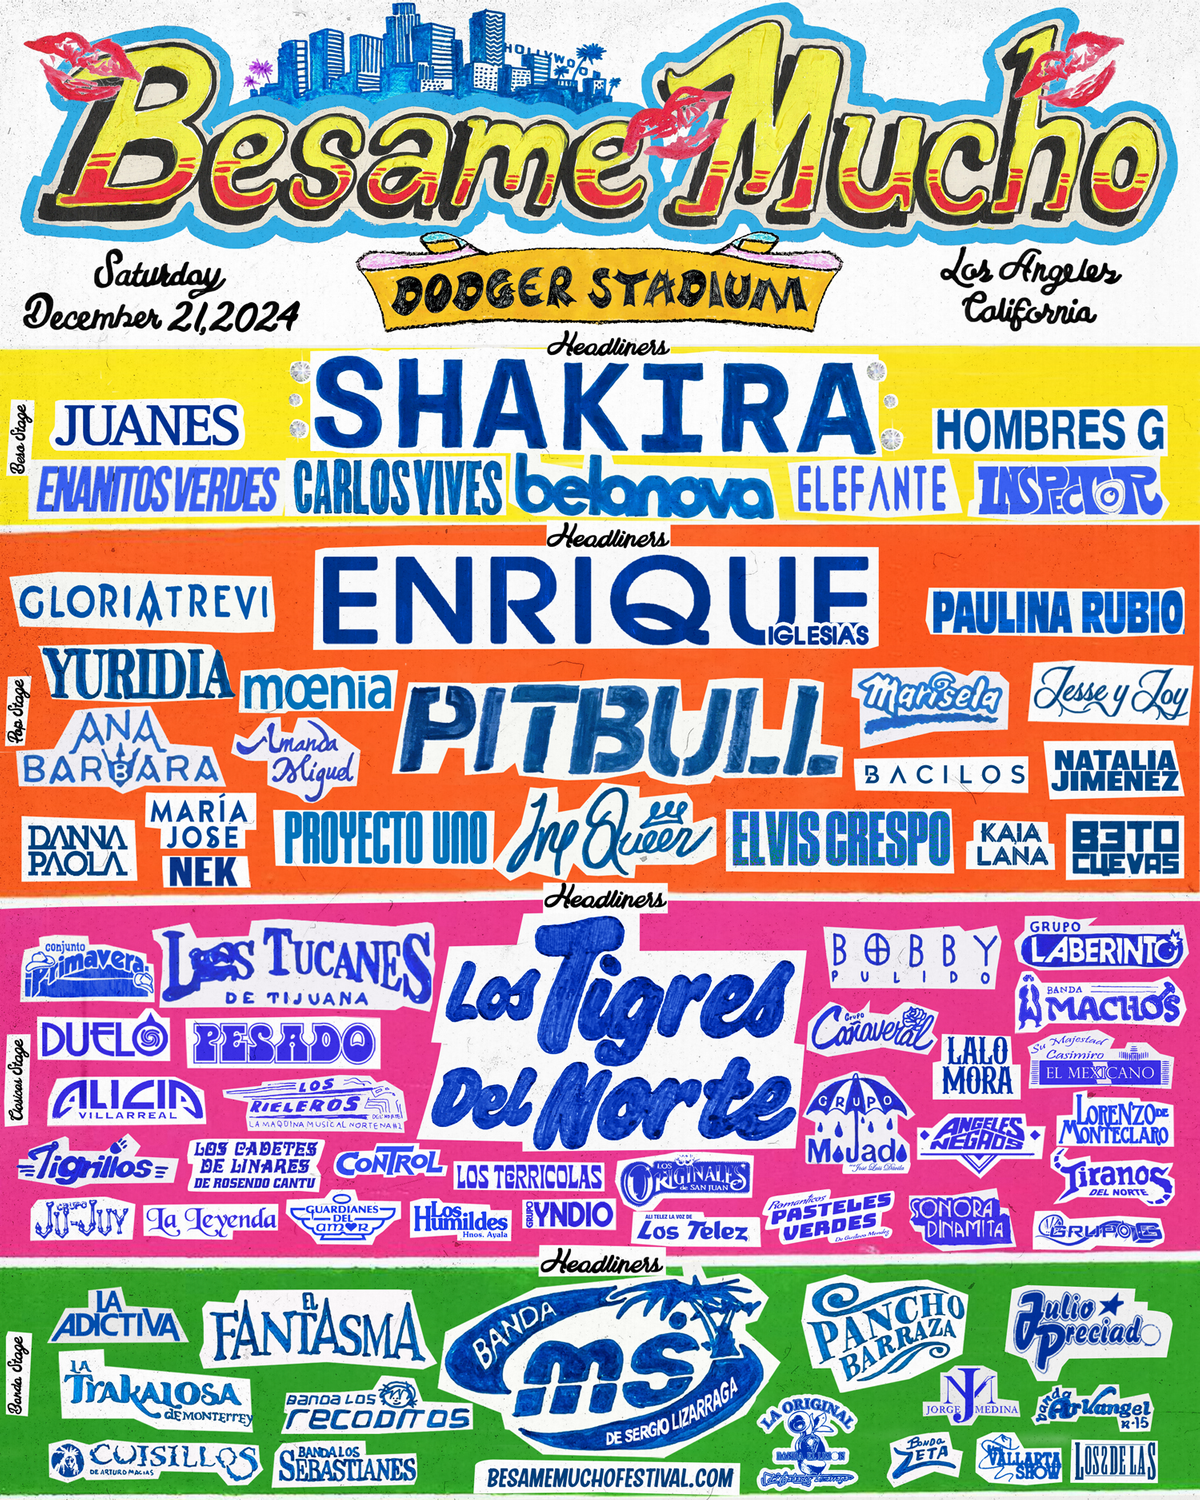 Besame Mucho 2024 Lineup: Shakira, Los Tigres del Norte, Enrique Iglesias, Banda MS, Pitbull, Carlos Vives, Hombres G, Belanova, Gloria Trevi, Juanes and many more